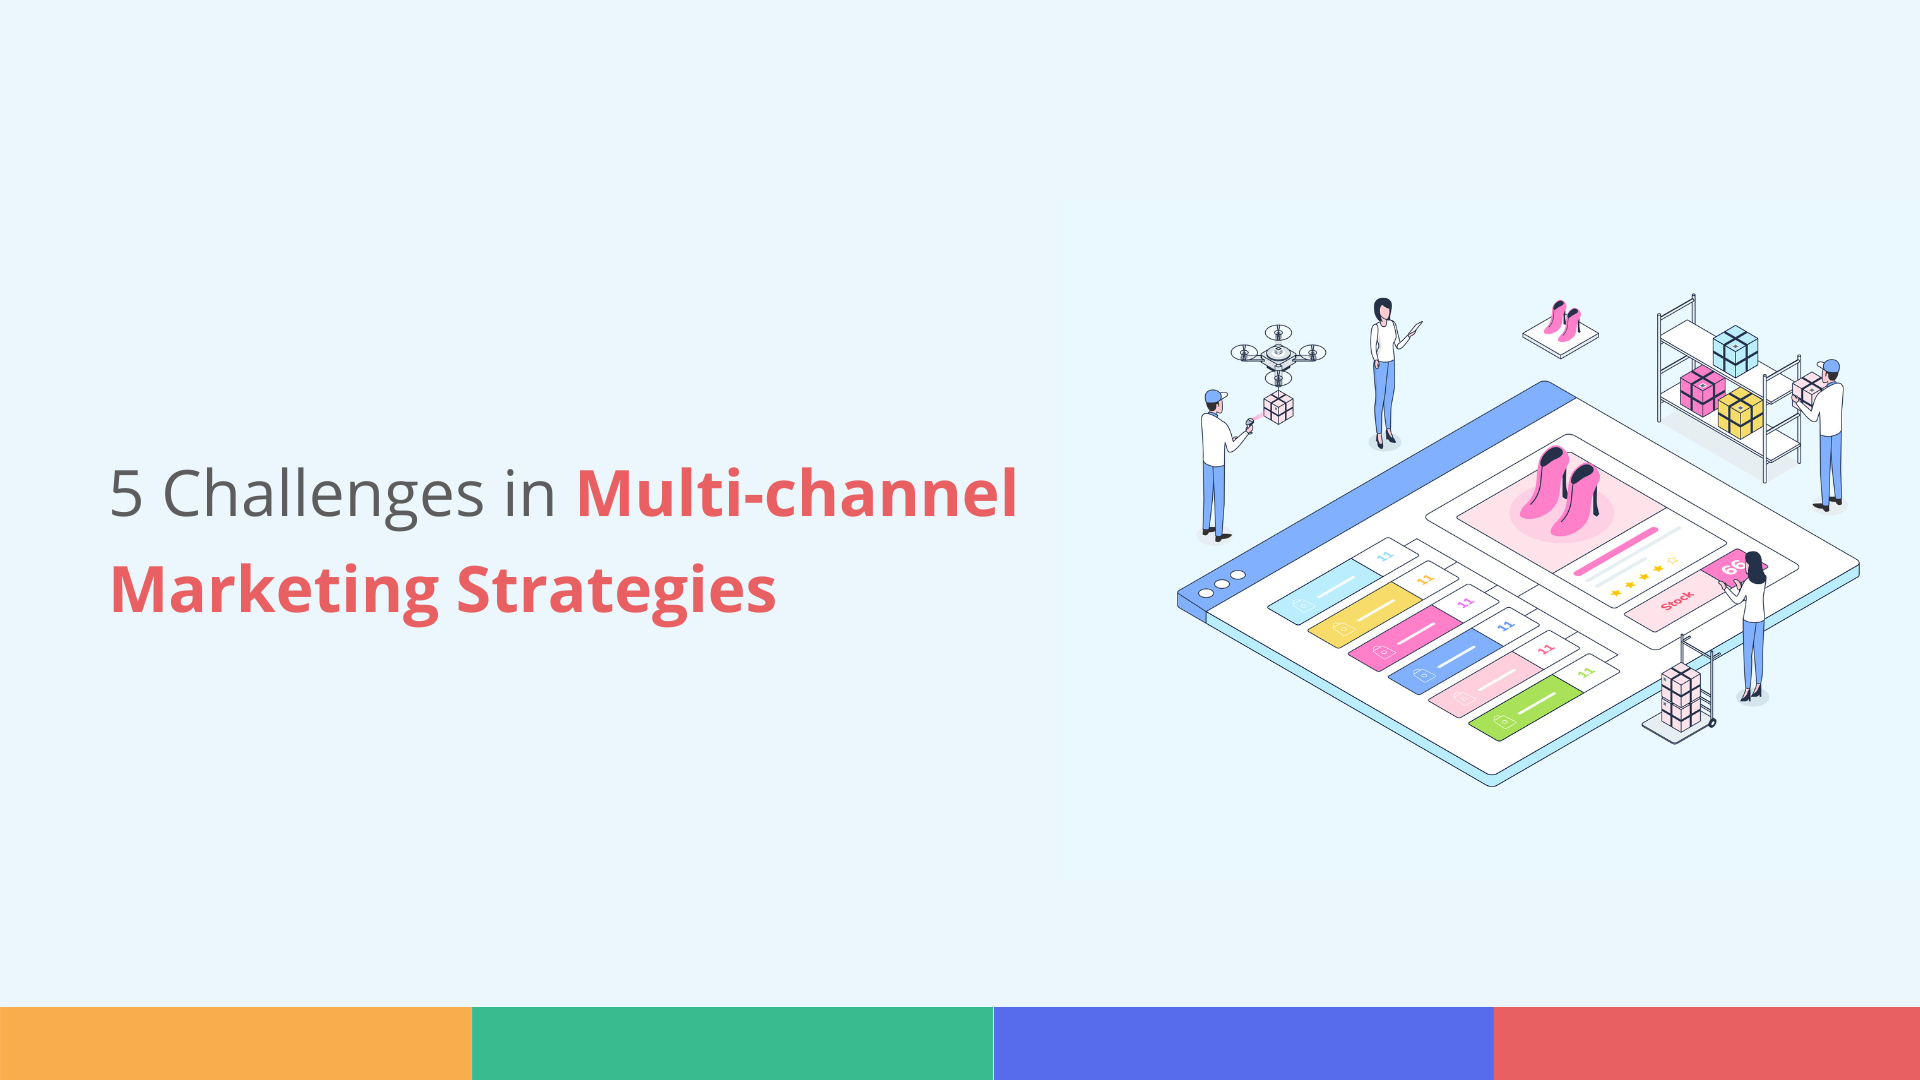 Multi-channel Marketing Strategy